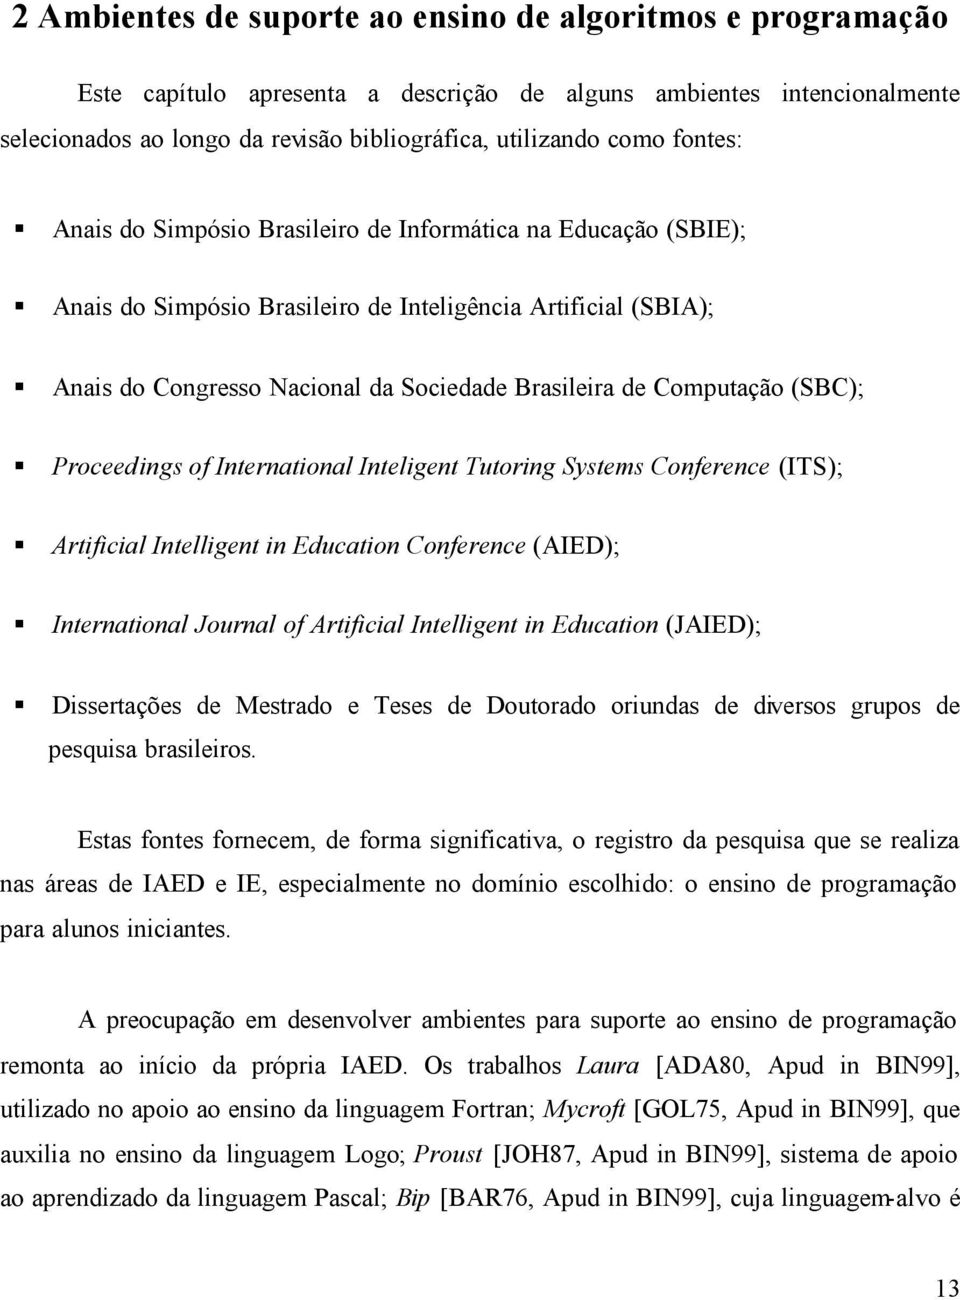 Computação (SBC); Proceedings of International Inteligent Tutoring Systems Conference (ITS); Artificial Intelligent in Education Conference (AIED); International Journal of Artificial Intelligent in